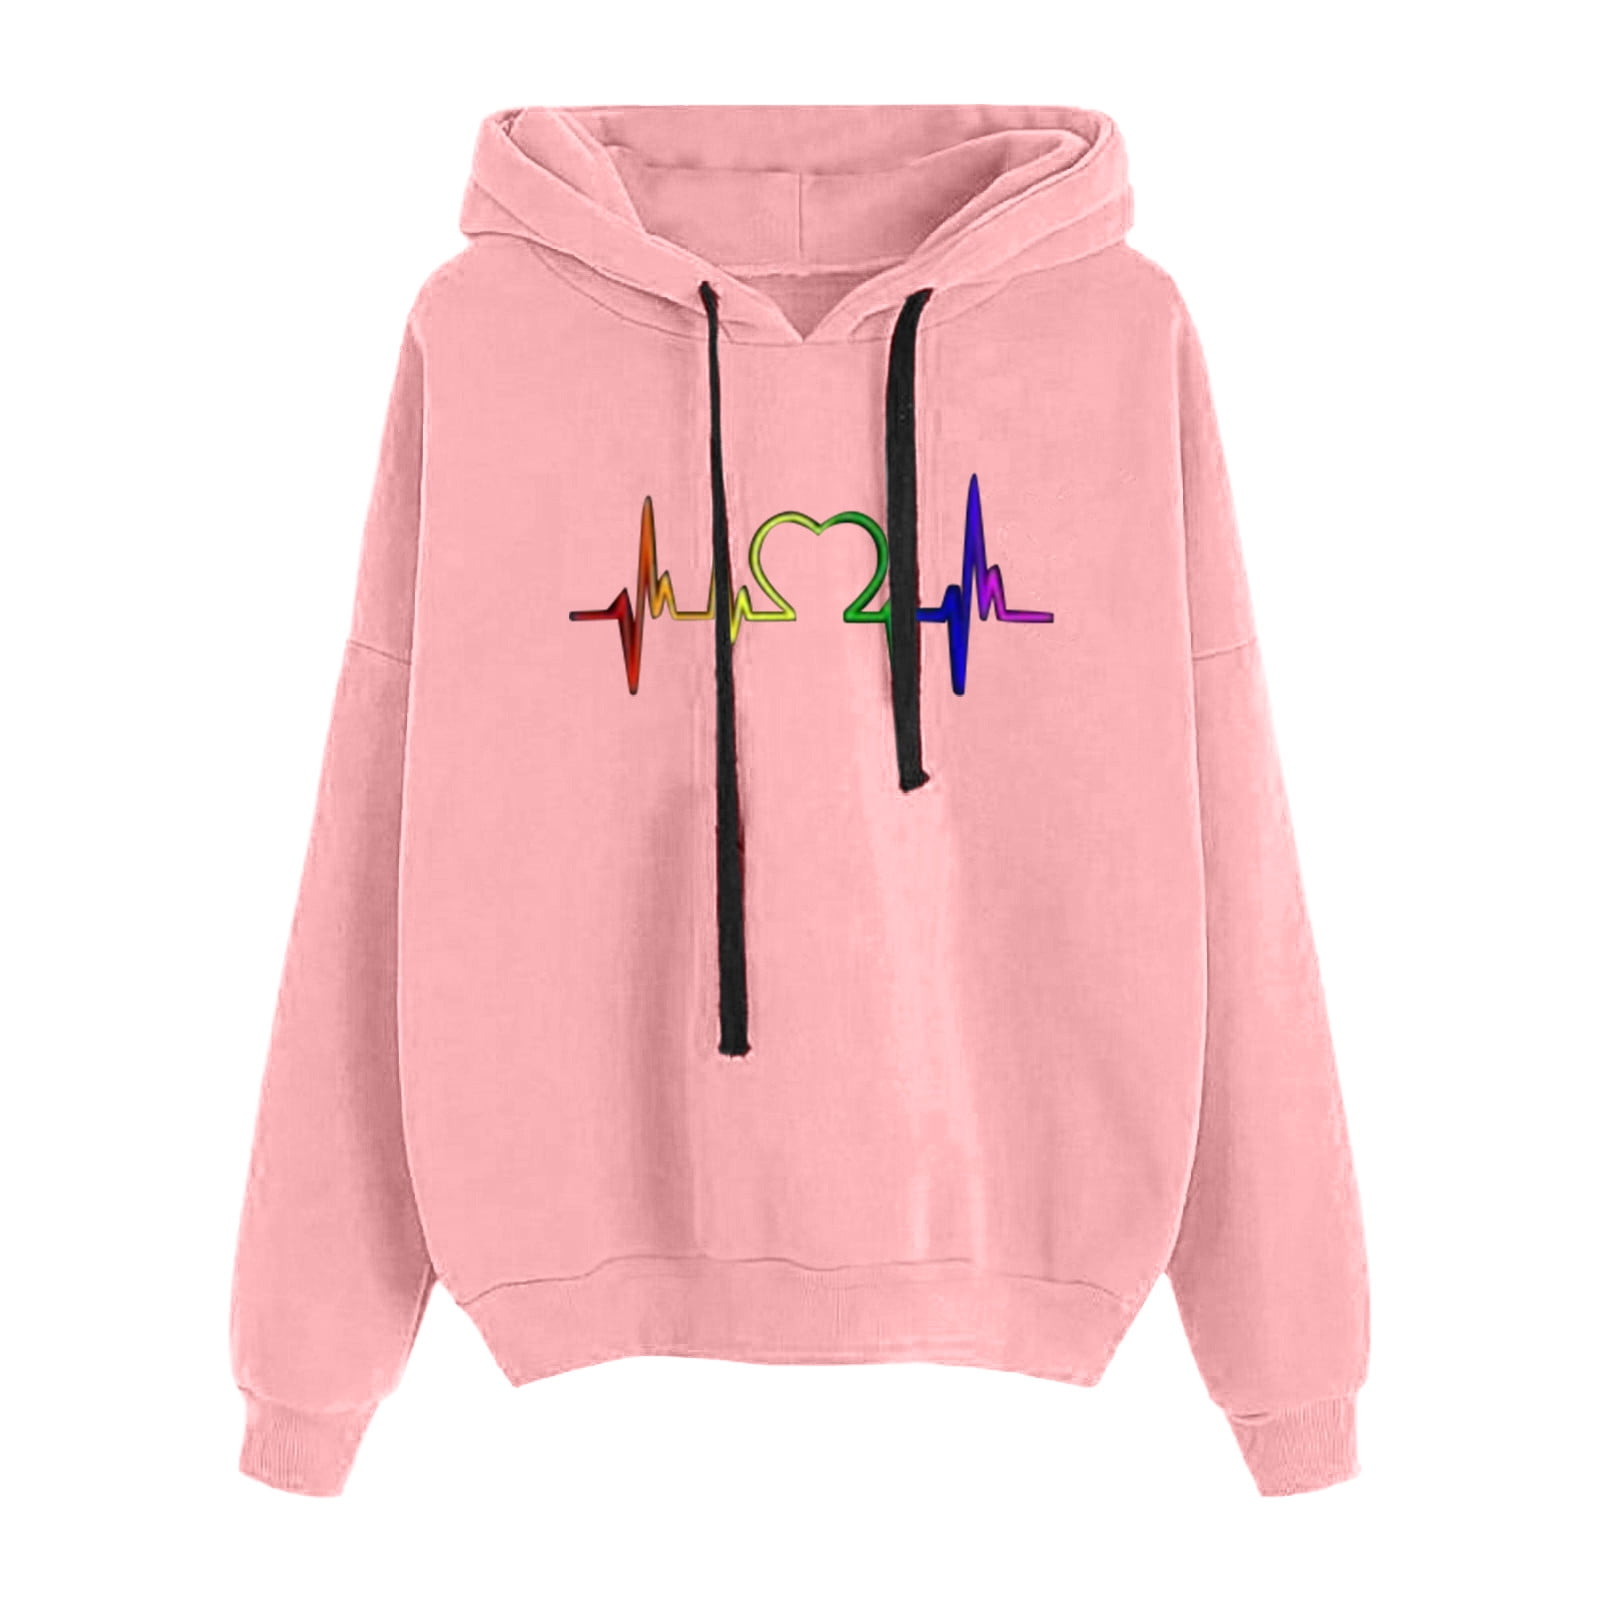 Hoodies for Women,Women Winter Casual Cat Earsl Electrocardiogram Print Loose Hooded Sweatshirt